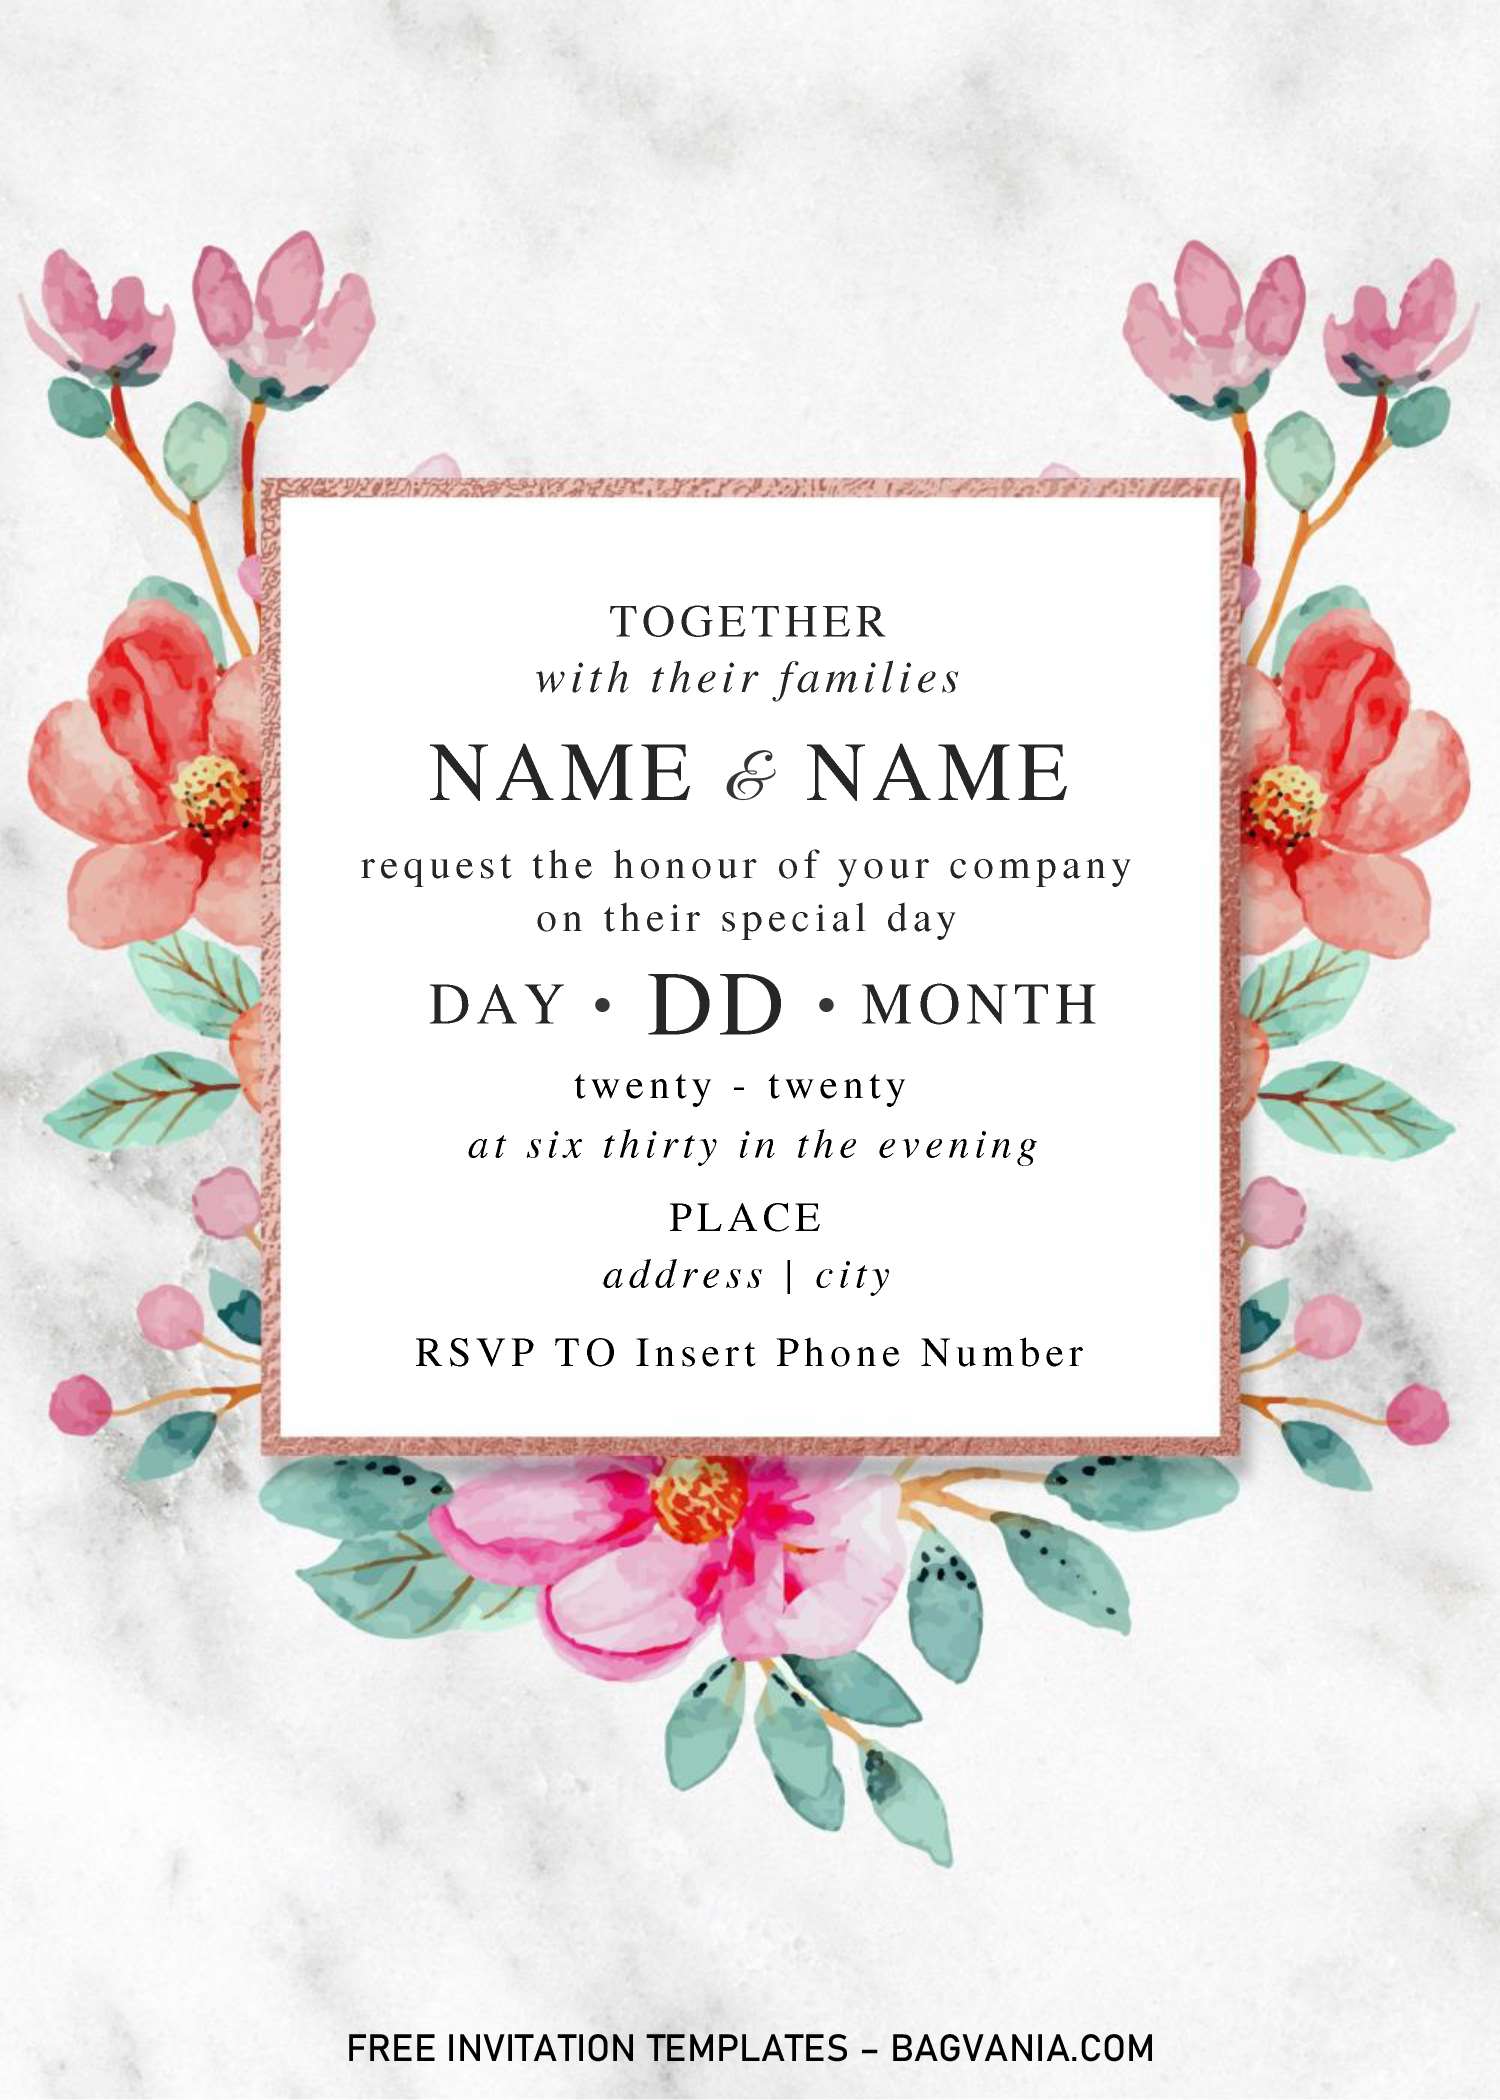 Free Editable Wedding Invitation Templates For Word